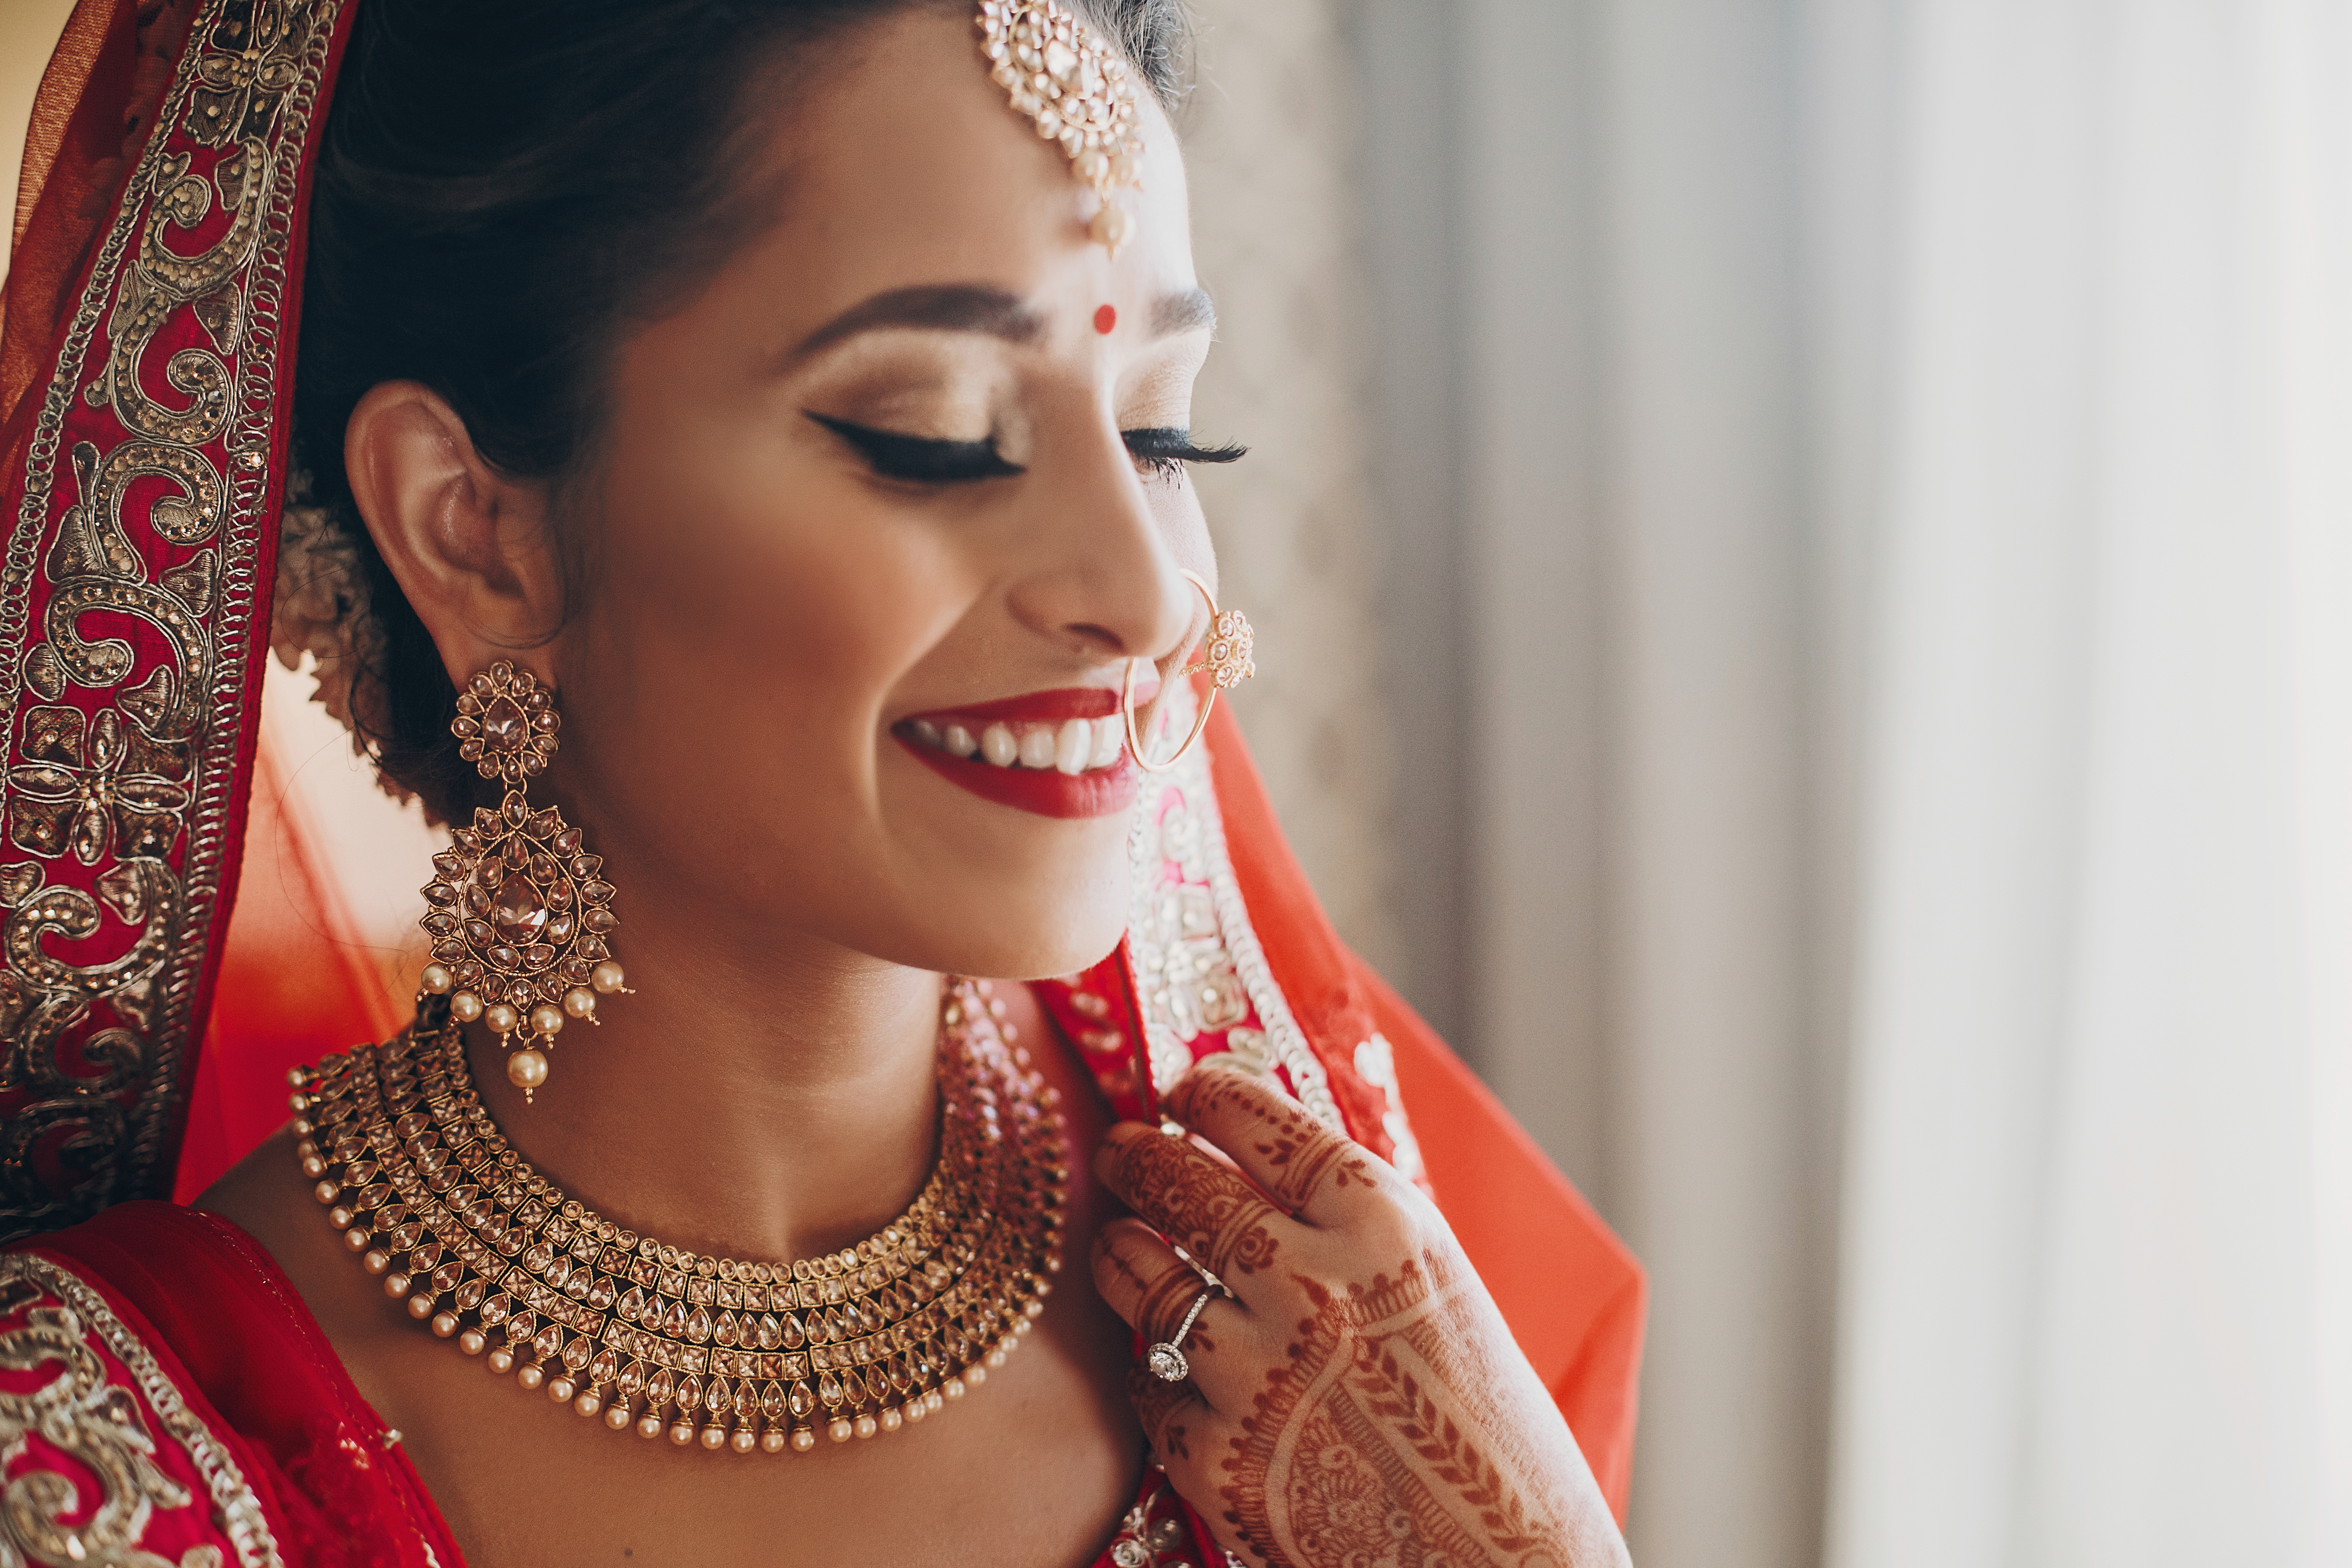 A happy bride | Source: Shutterstock